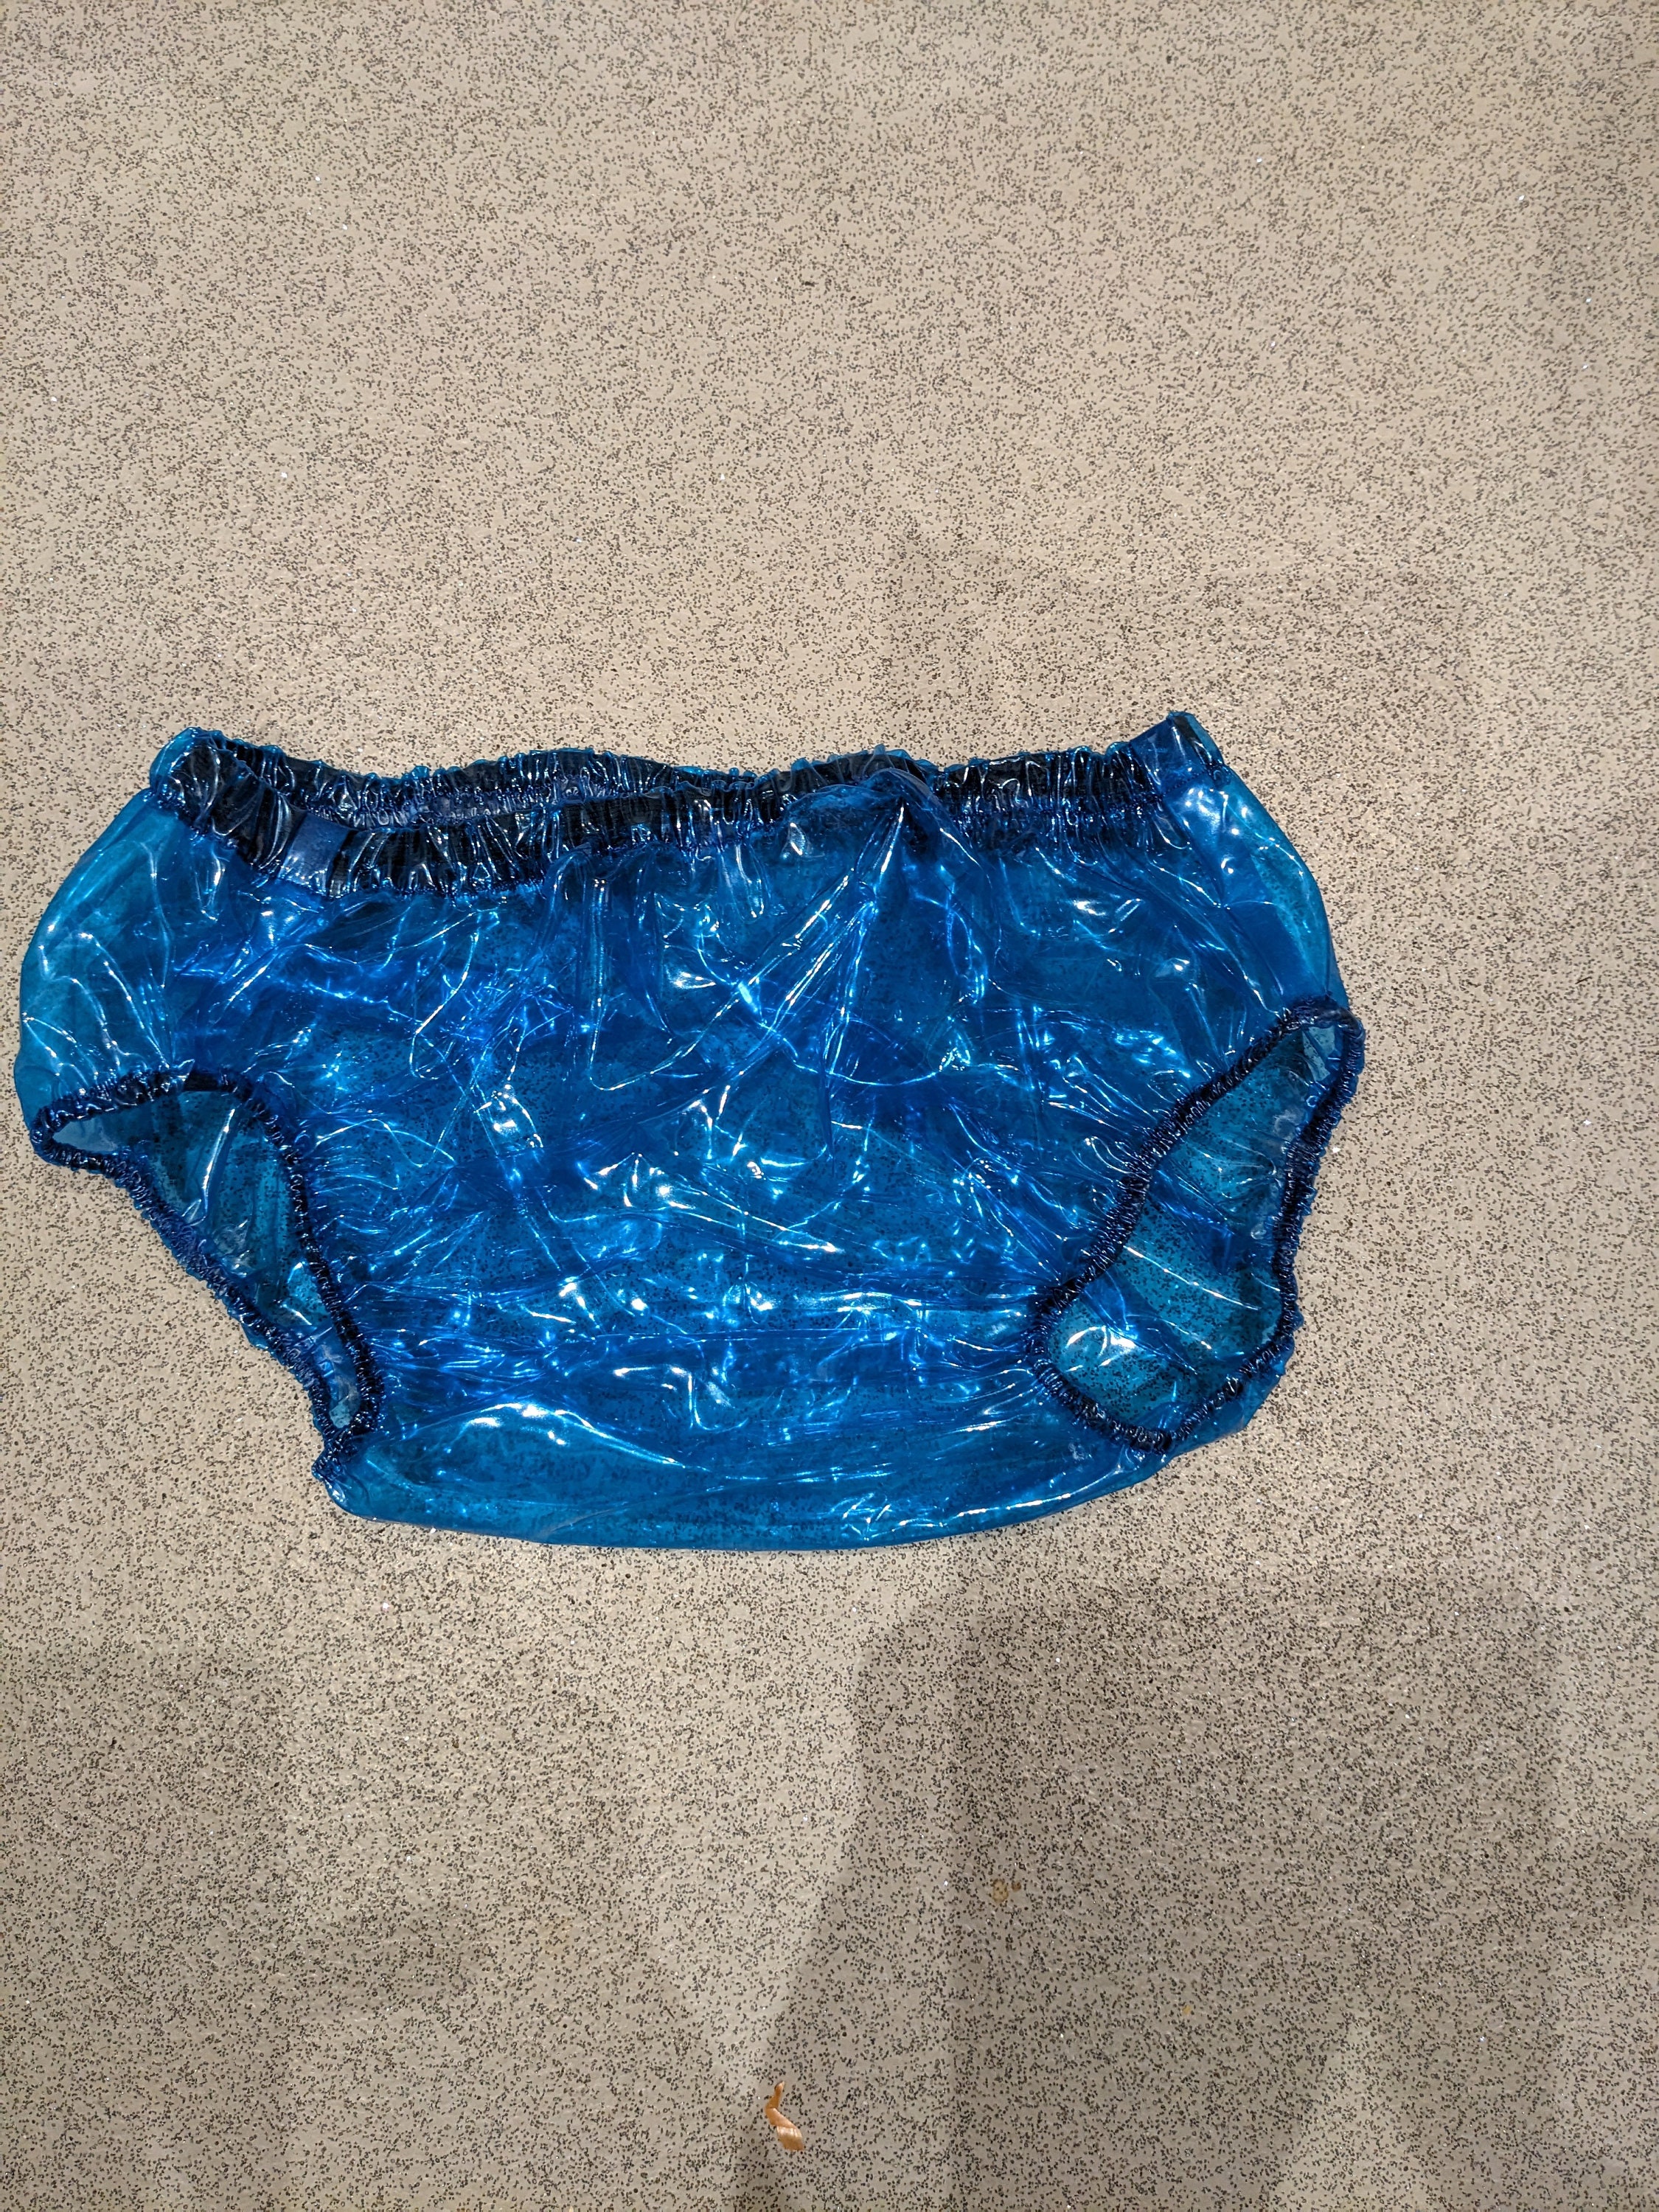 46/48 Hip - Clear Plastic waterproof Pants - Blue Trim